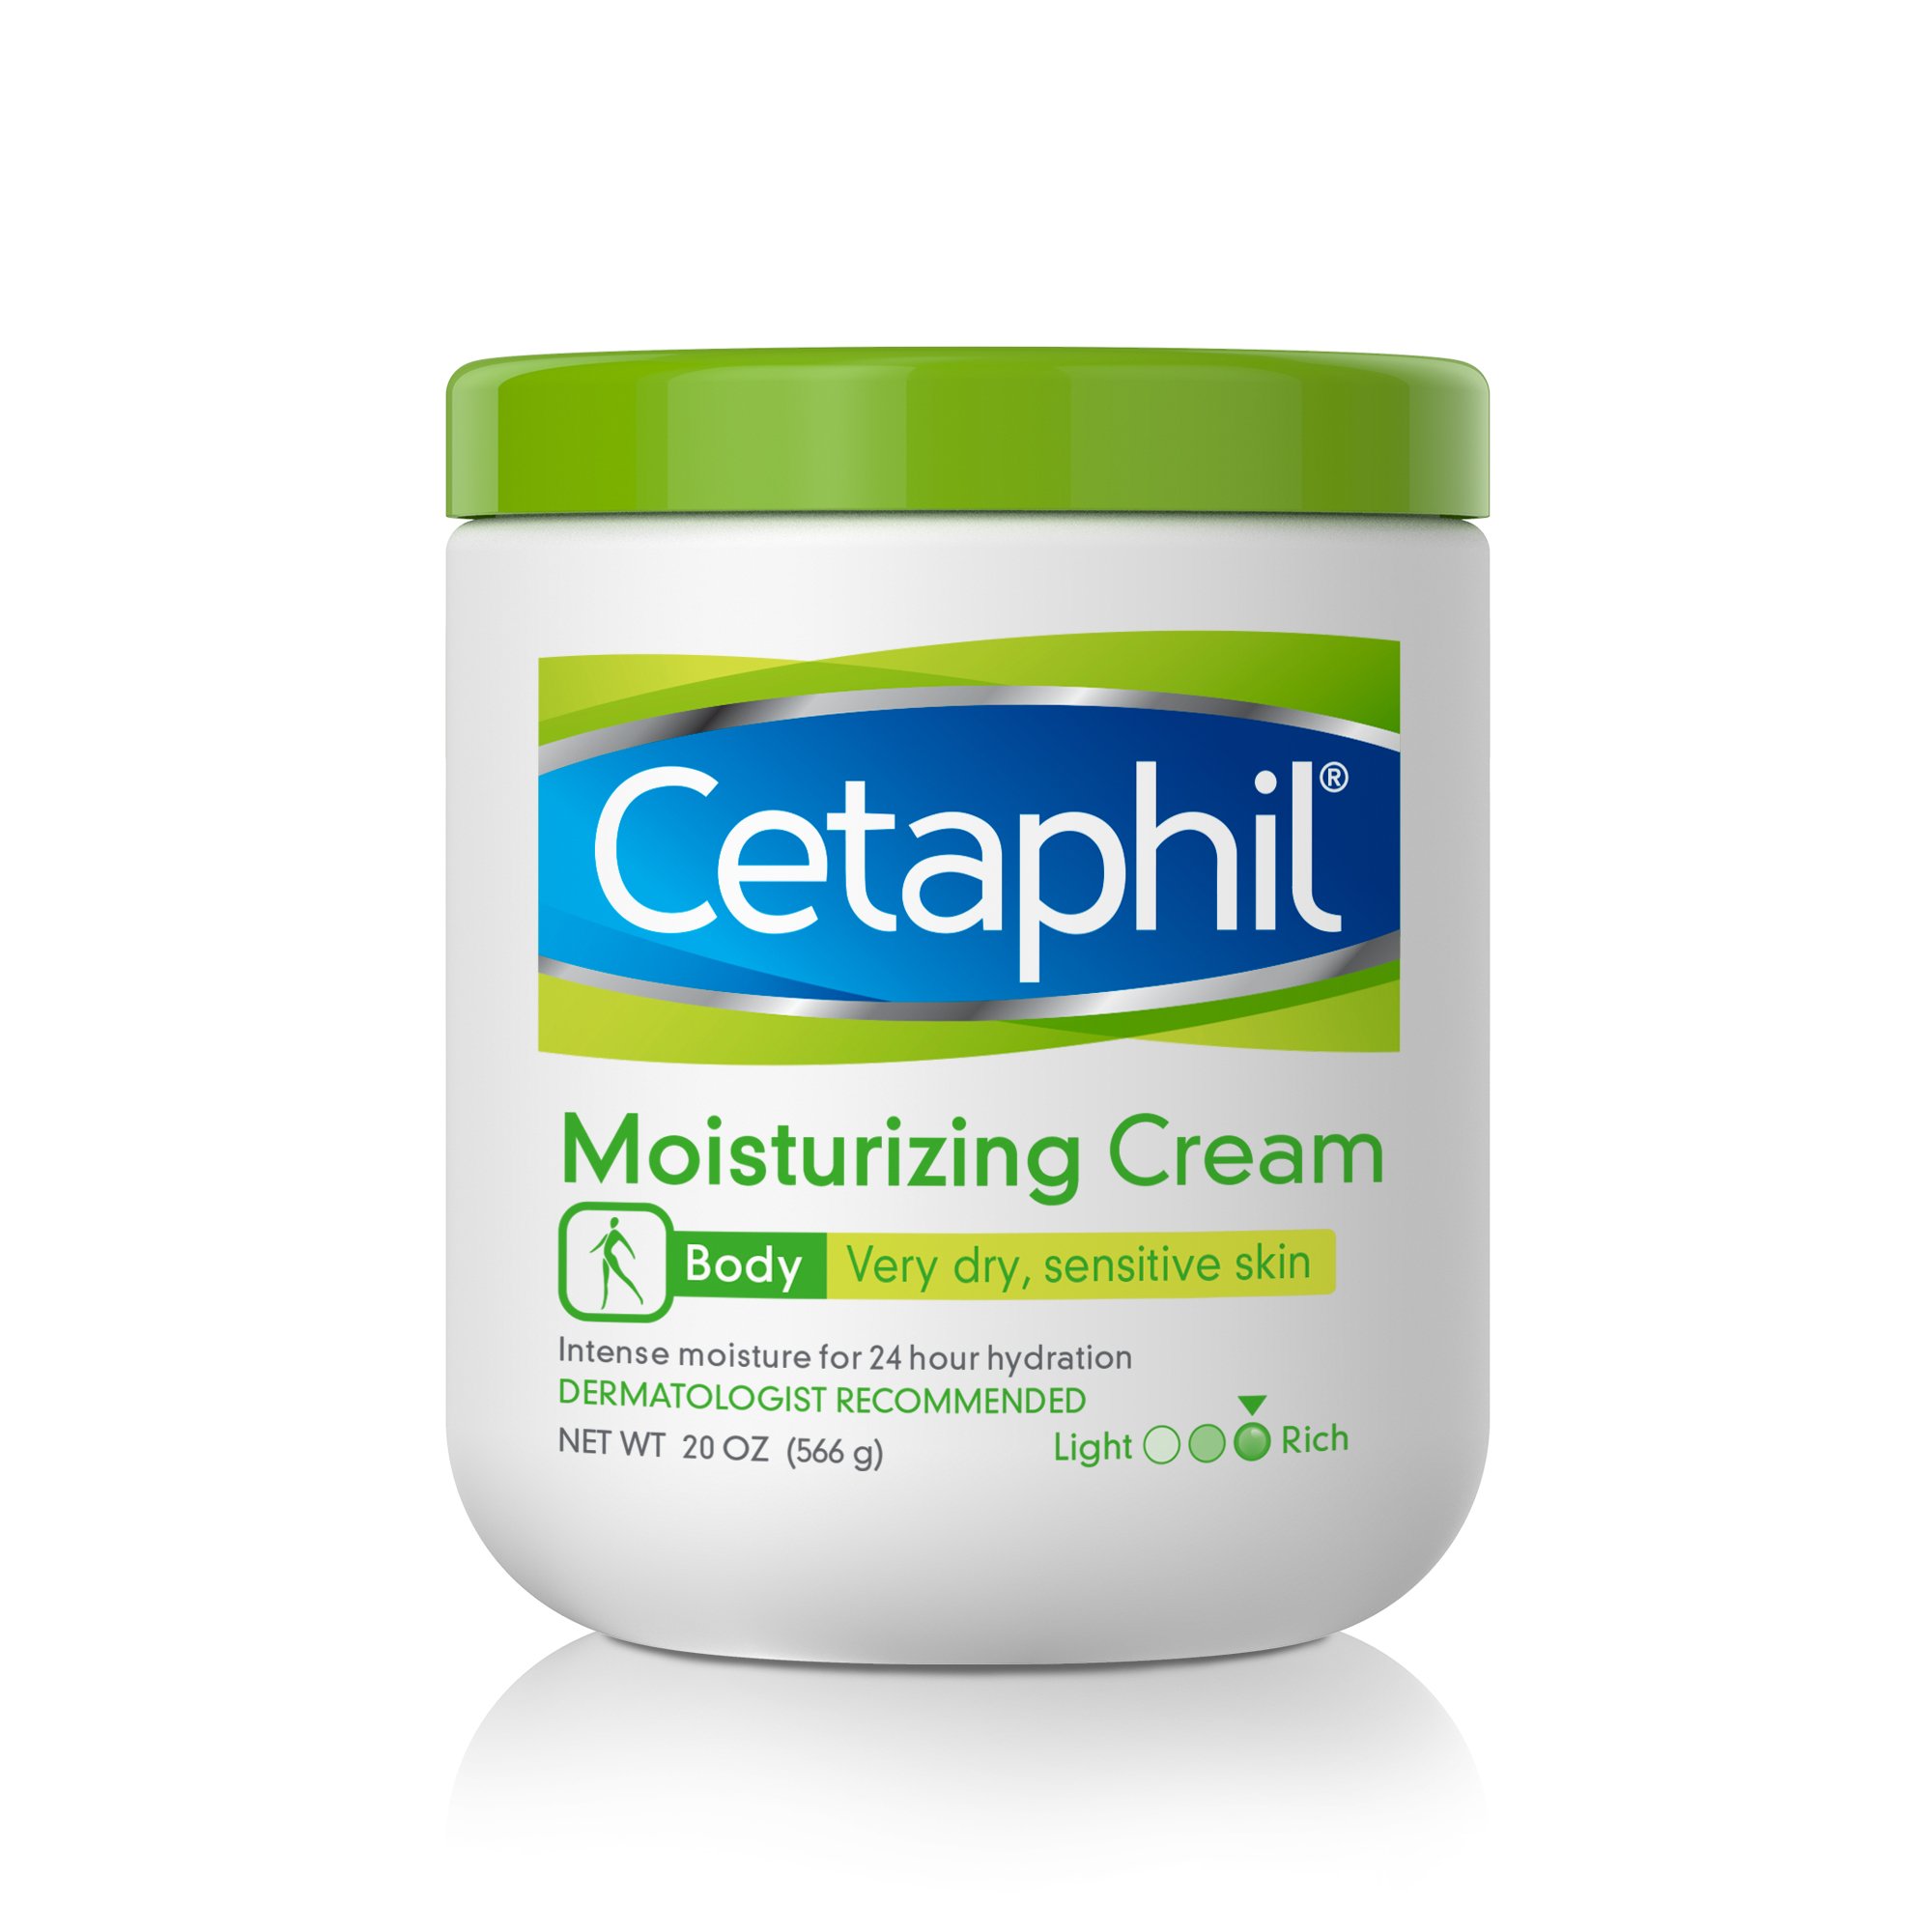 Cetaphil Moisturizing Cream Dry Sensitive Skin,Eczema Body ...